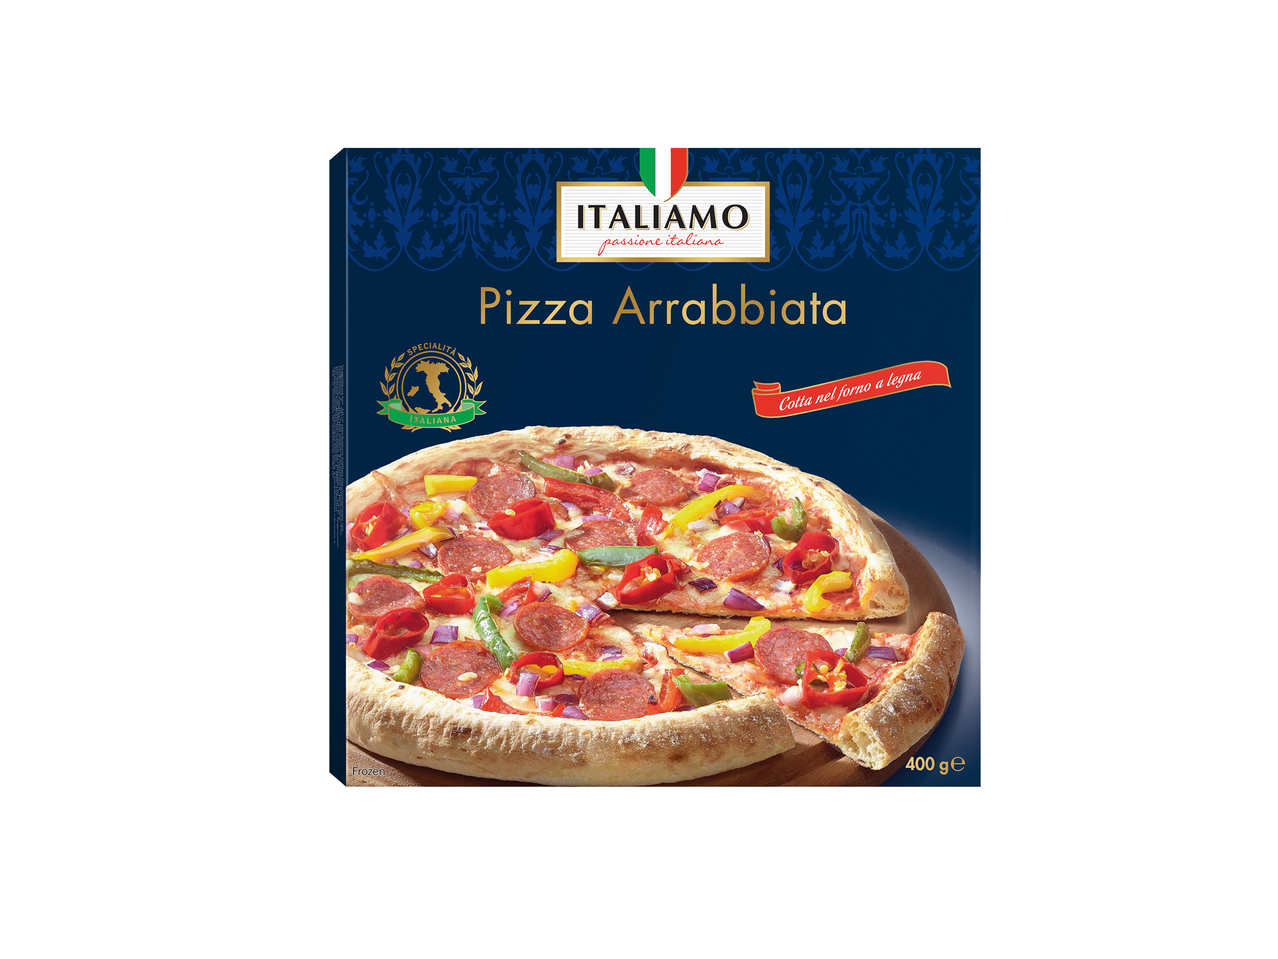 ITALIAMO(R) Pizza Fiambre e Queijo / Marinara / Arrabiata